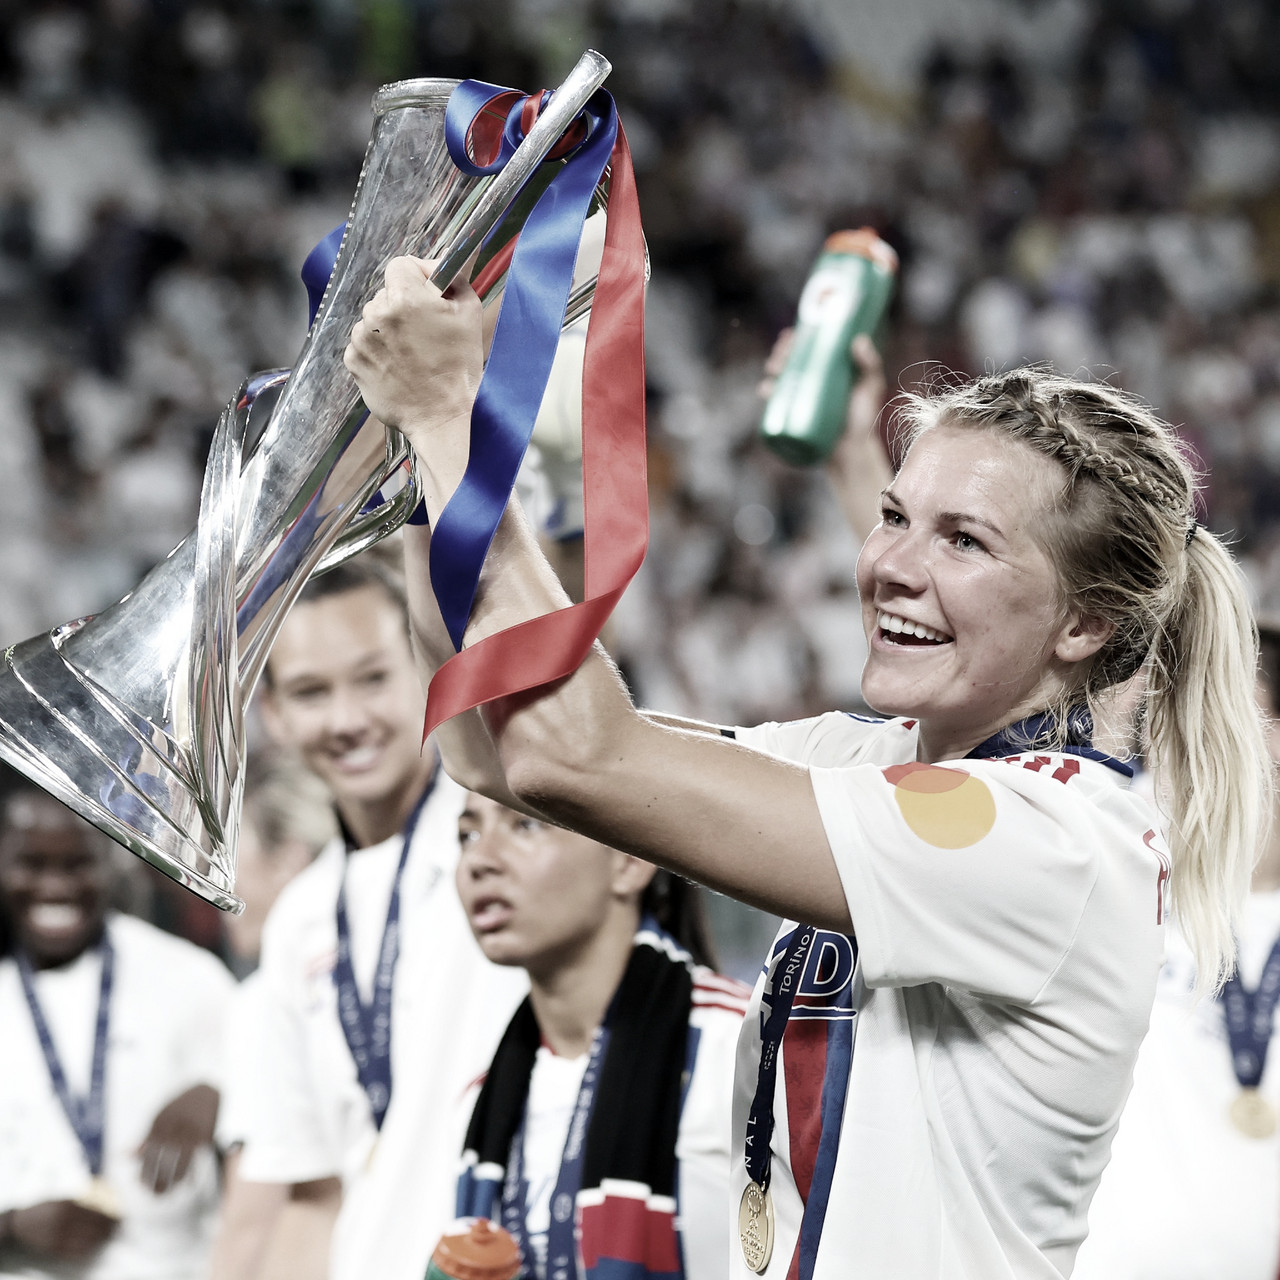 Ada Hegerberg realça oitavo título do Lyon na Champions League: "É merecido"